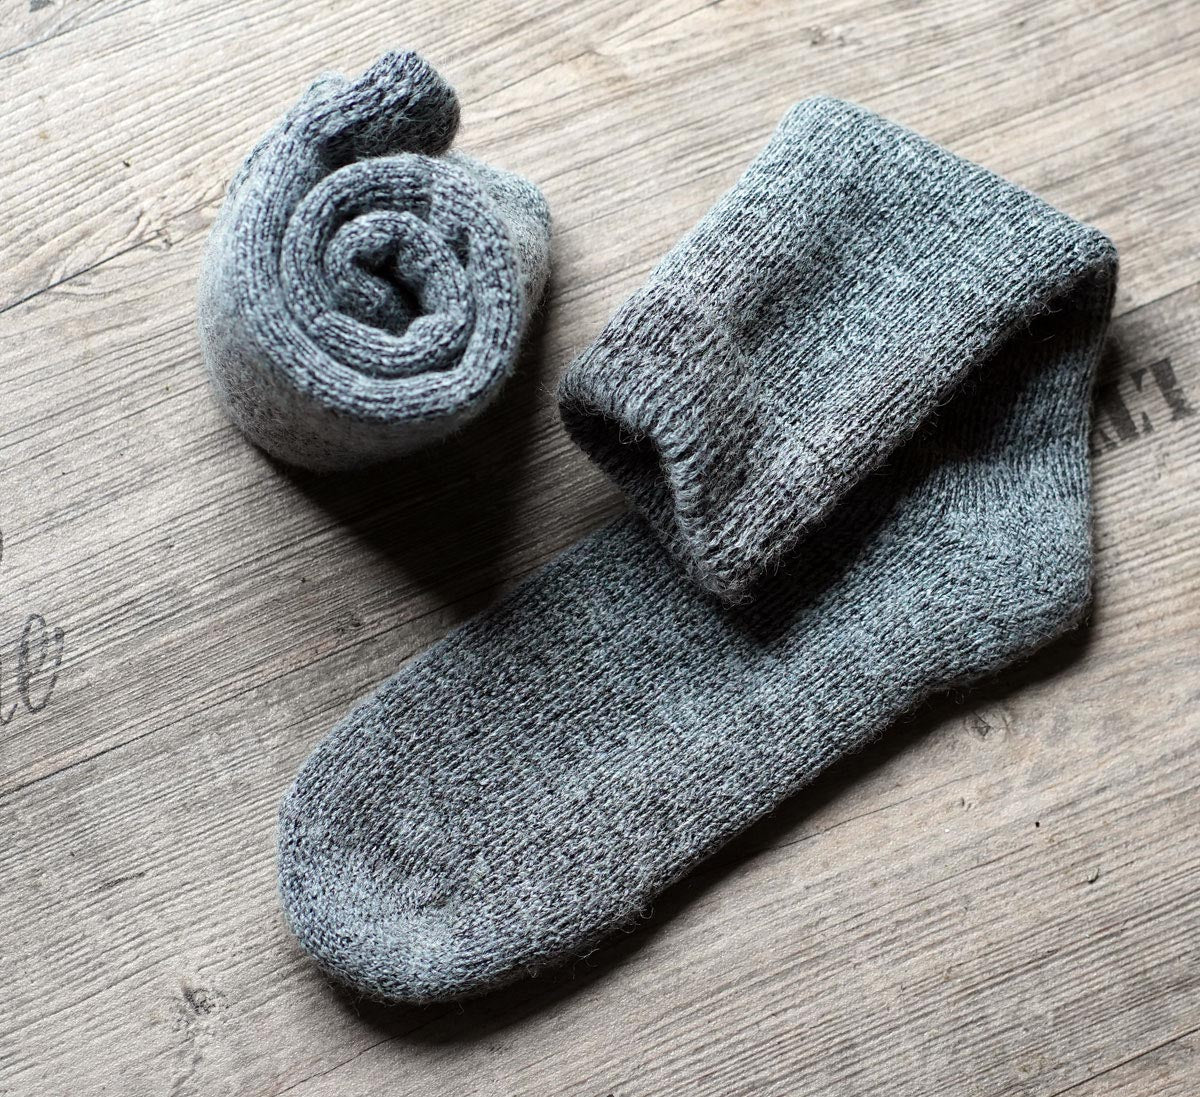 Winter Socken (Sehr warm) - Alpaka Kontor